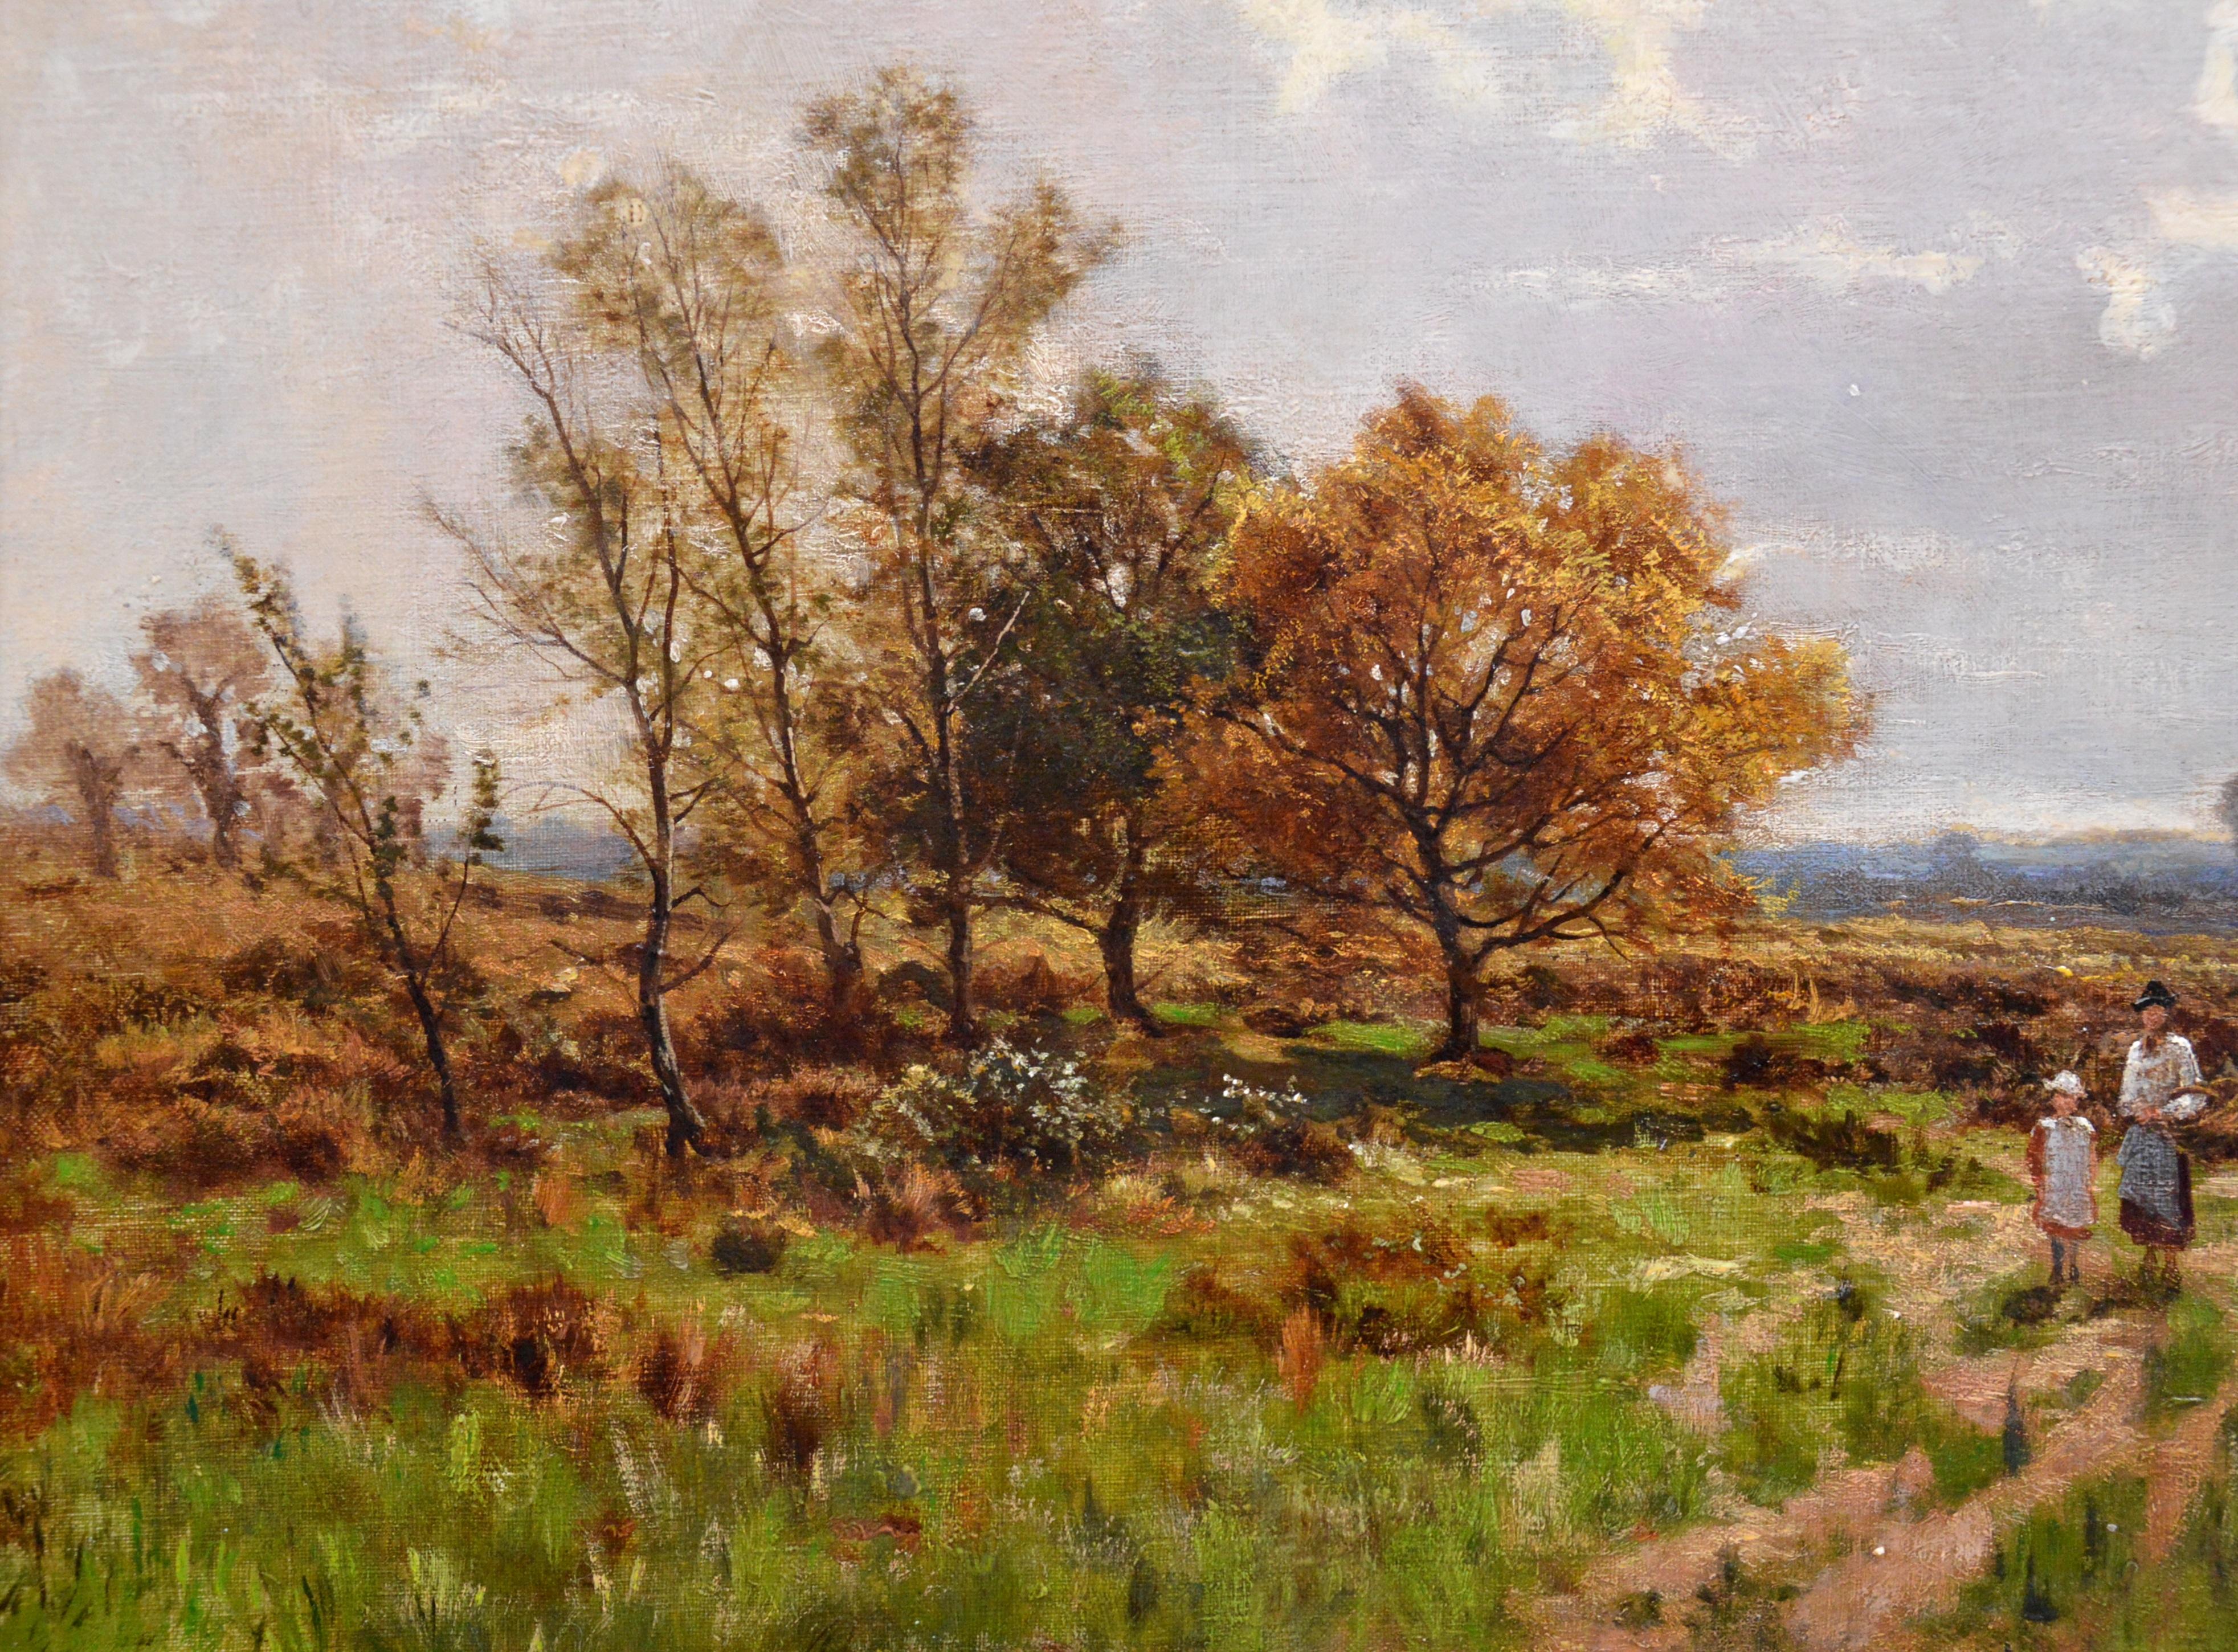 Near Stratford on Avon - 19th Century English Landscape Oil Painting Shakespeare 2